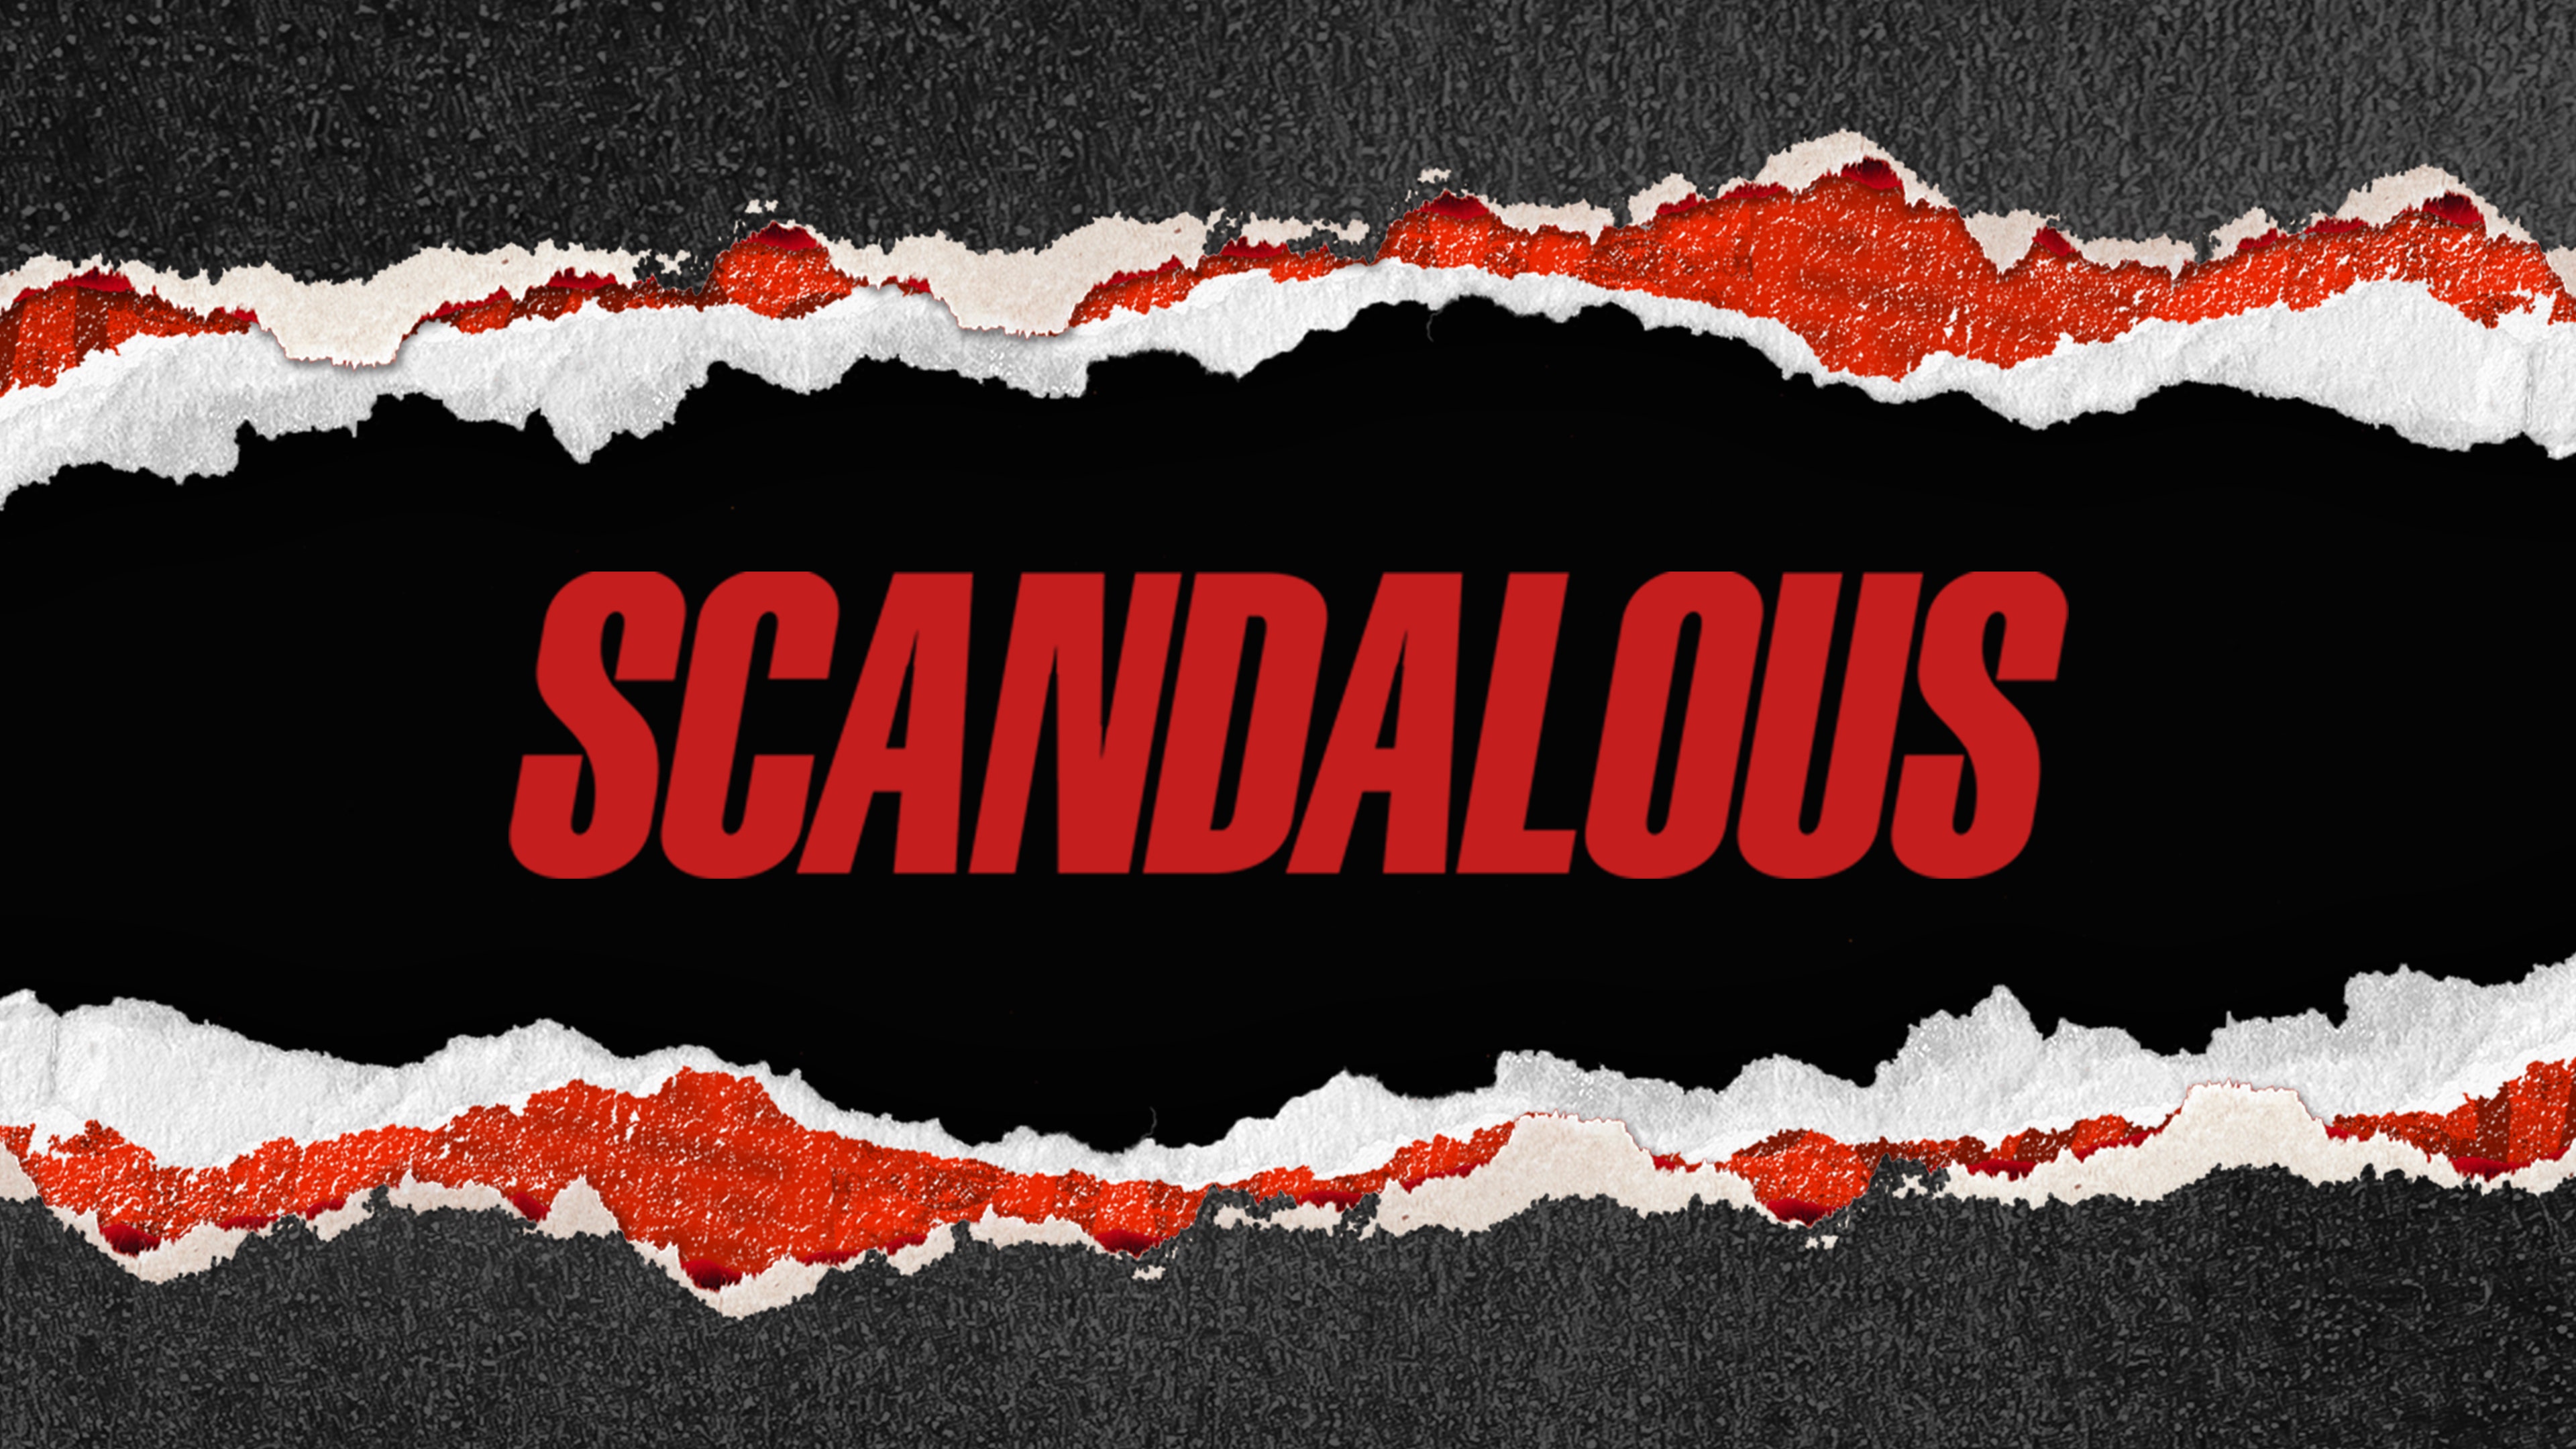 Scandalous Channel